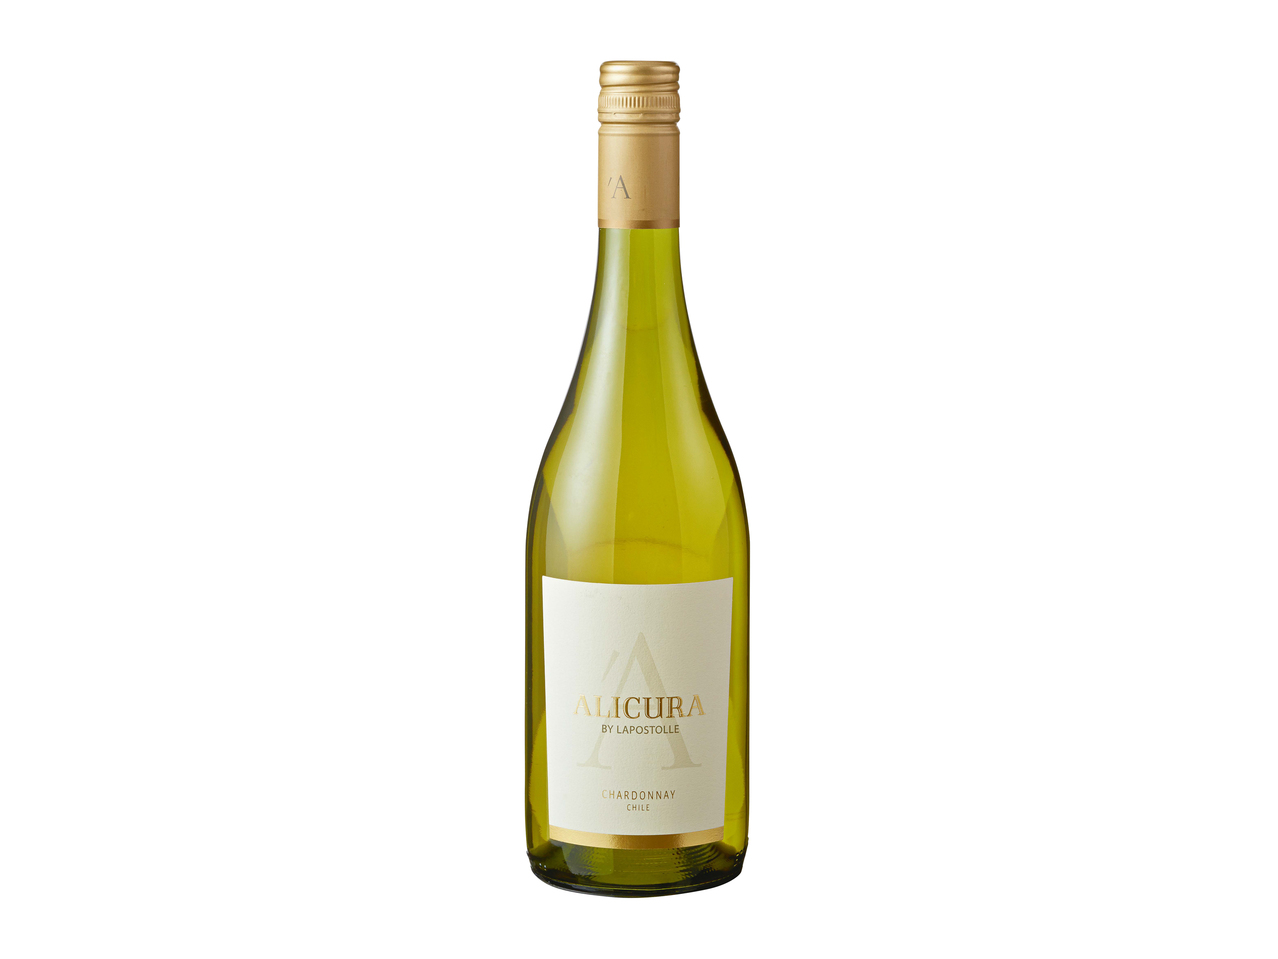 Alicura by Lapostolle Chardonnay, 2016